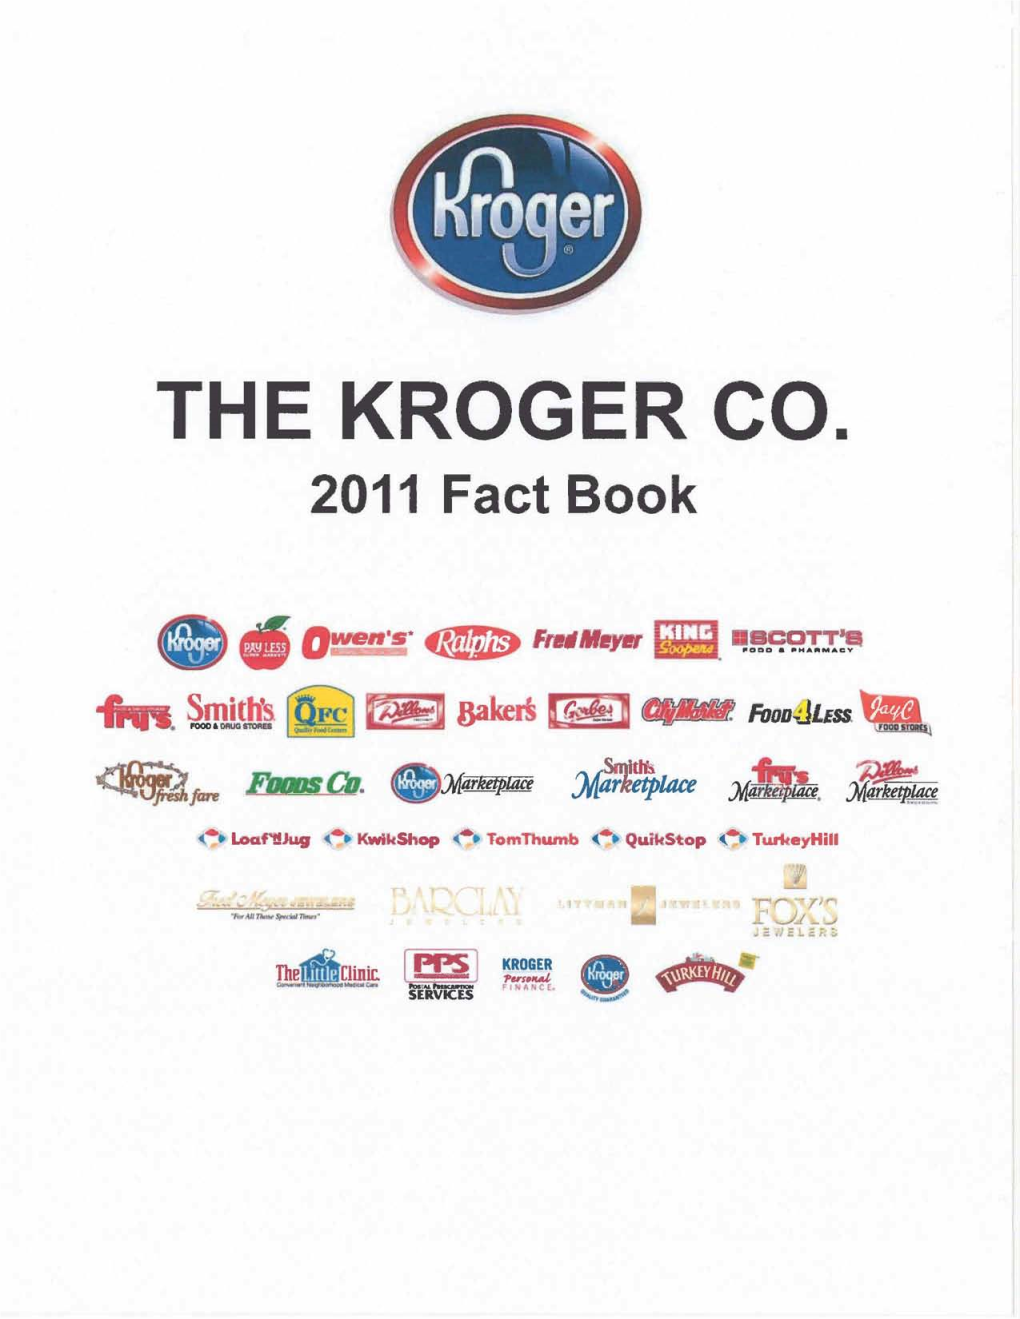 The Kroger Co